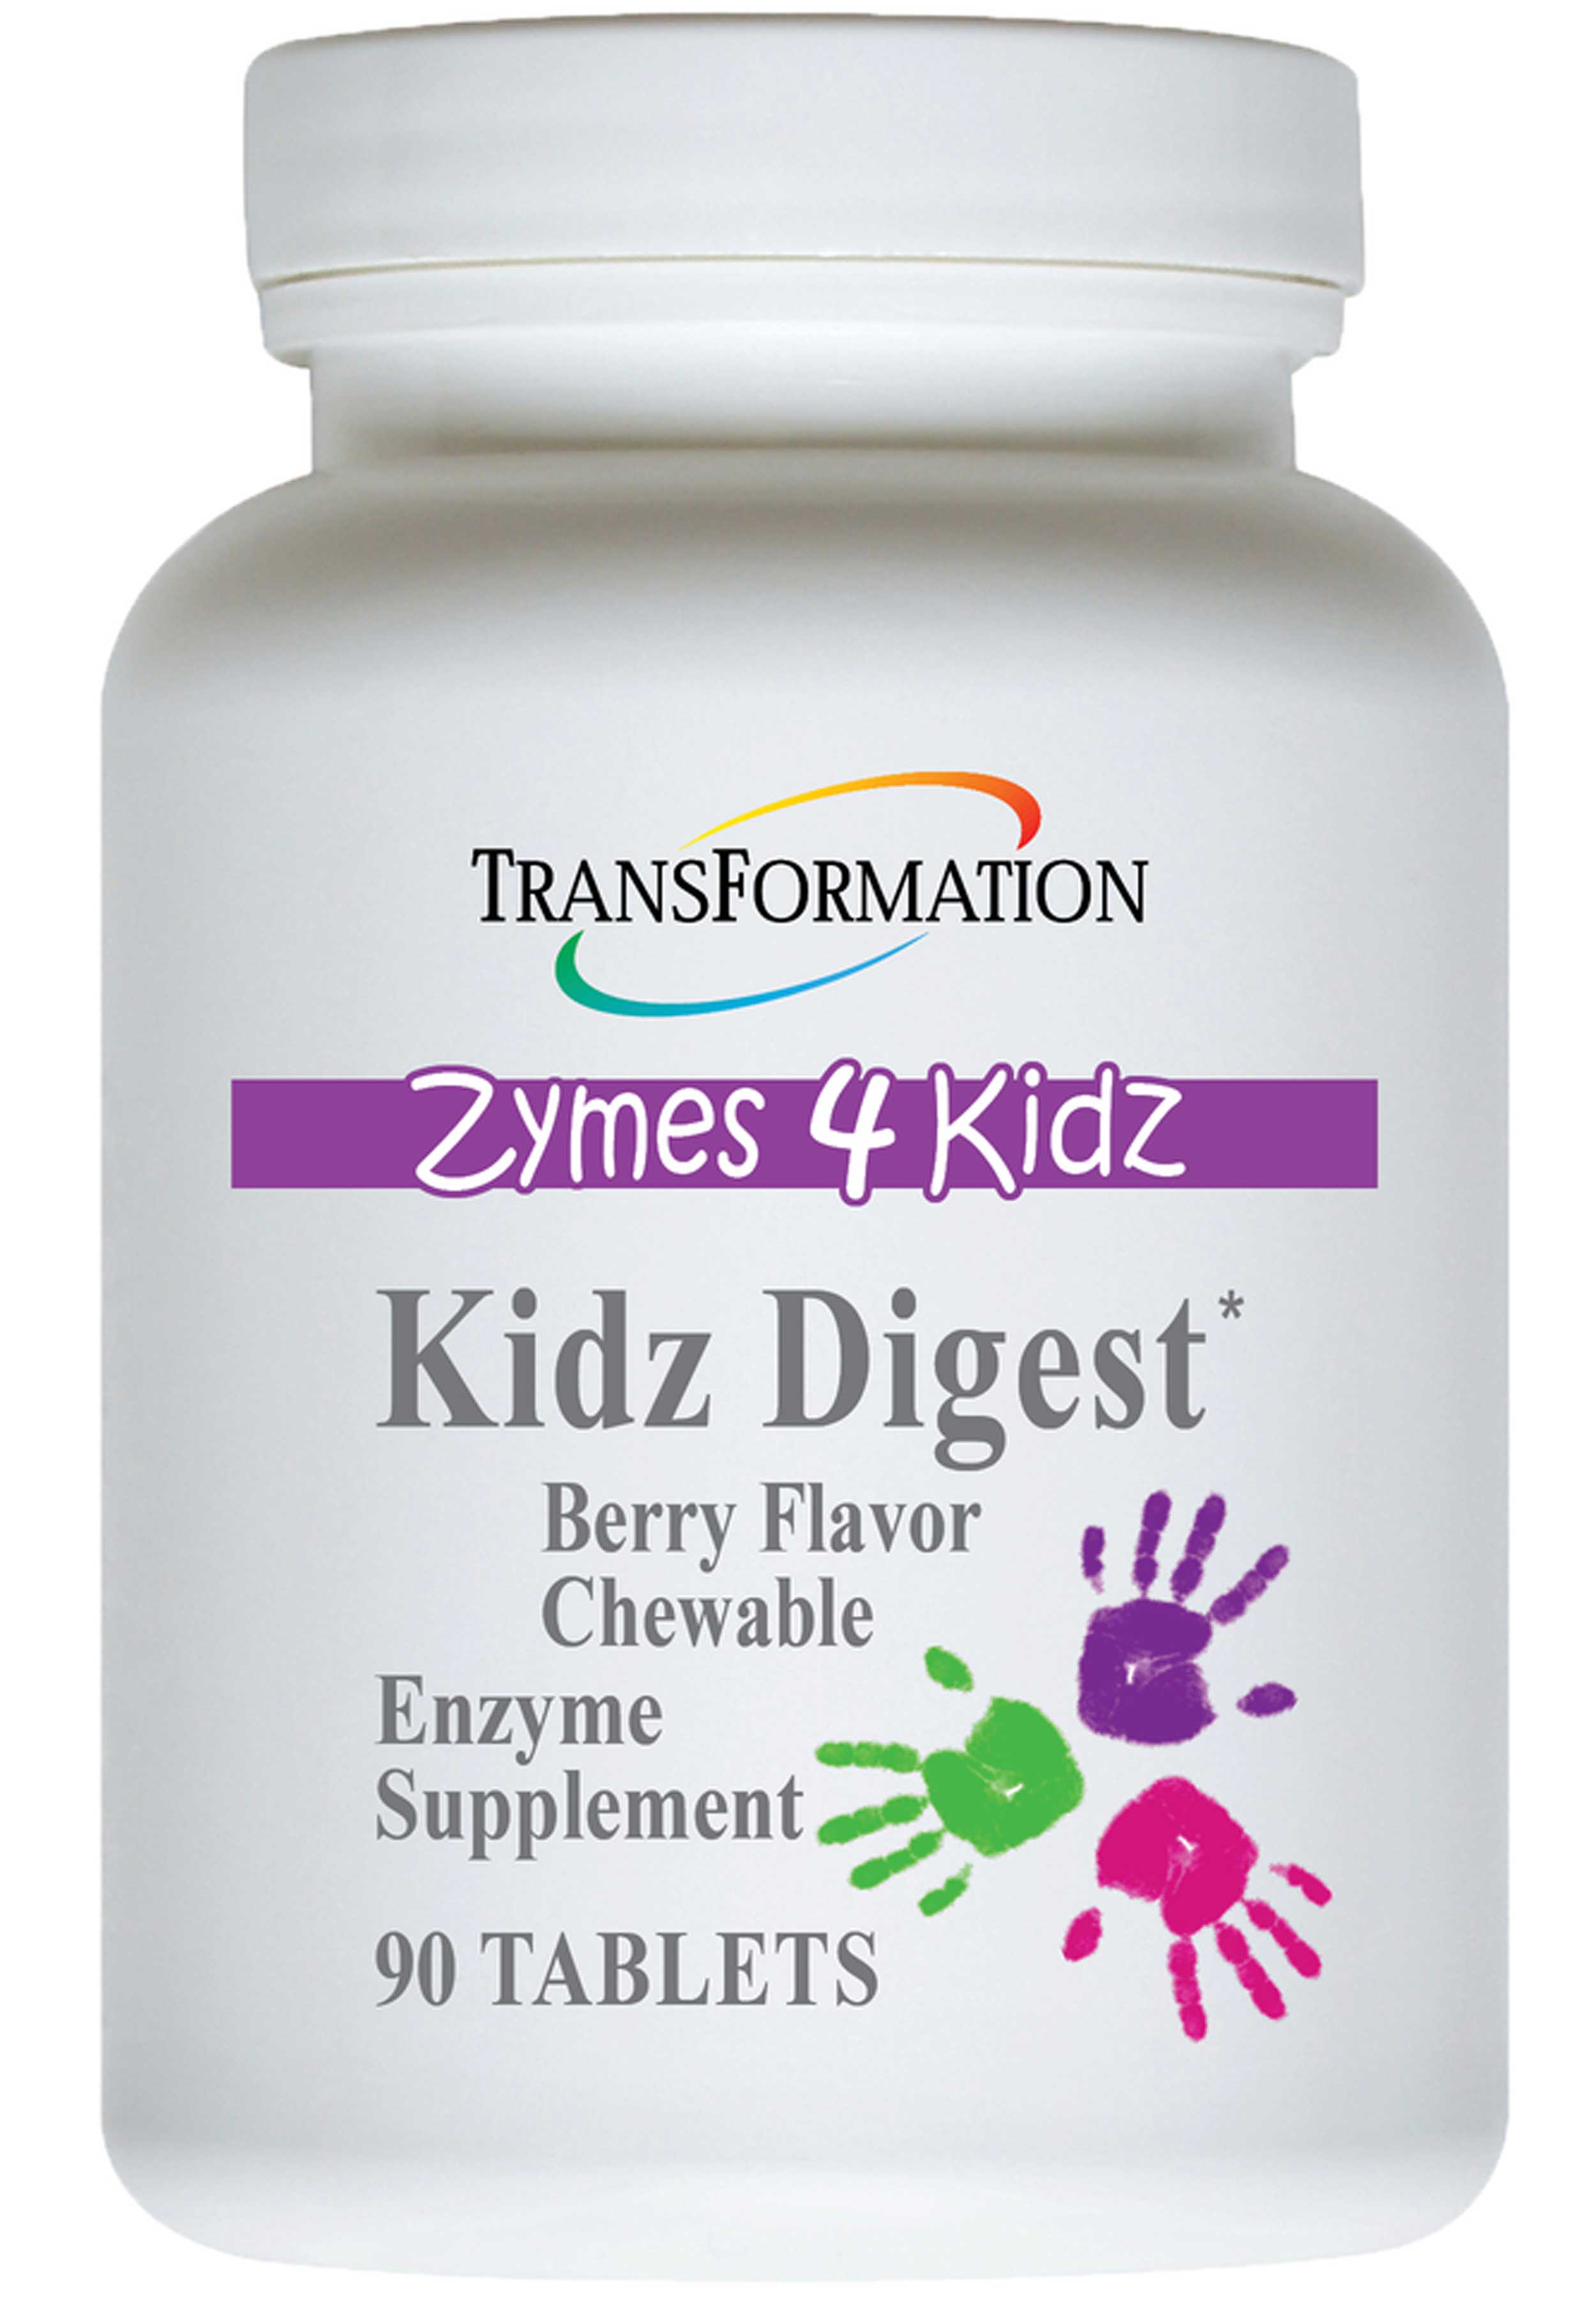 Transformation Enzyme Kidz Digest Chewable